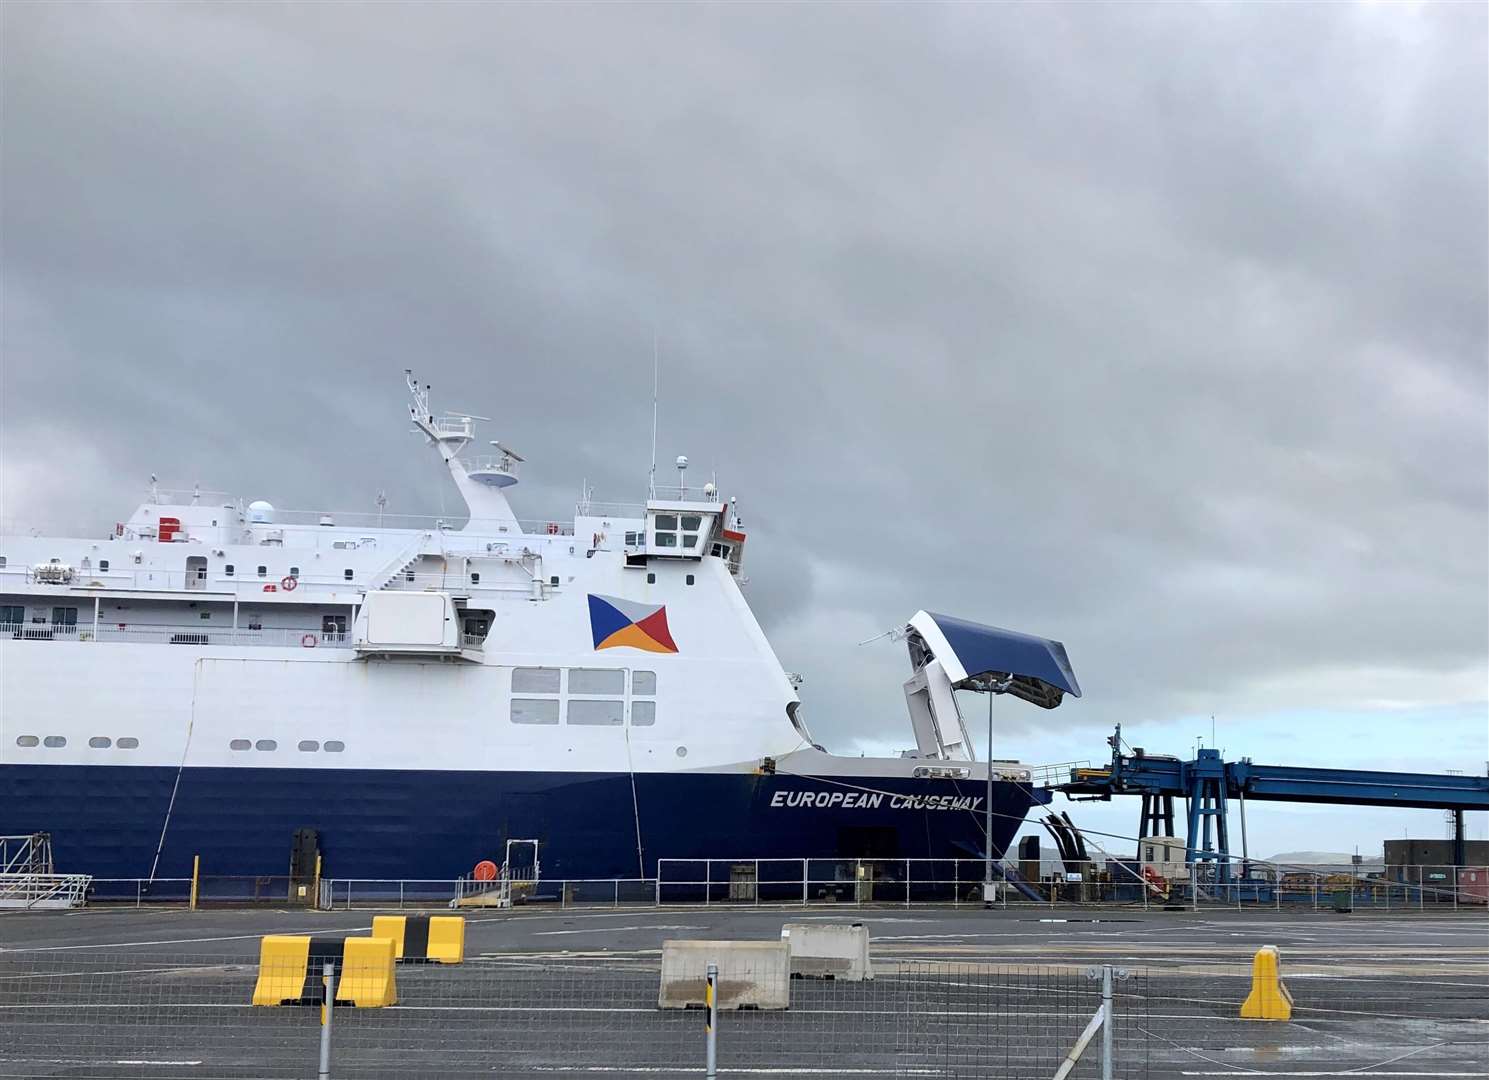 P&O European Causeway ferry docked at Larne Port last week (David Young/PA)